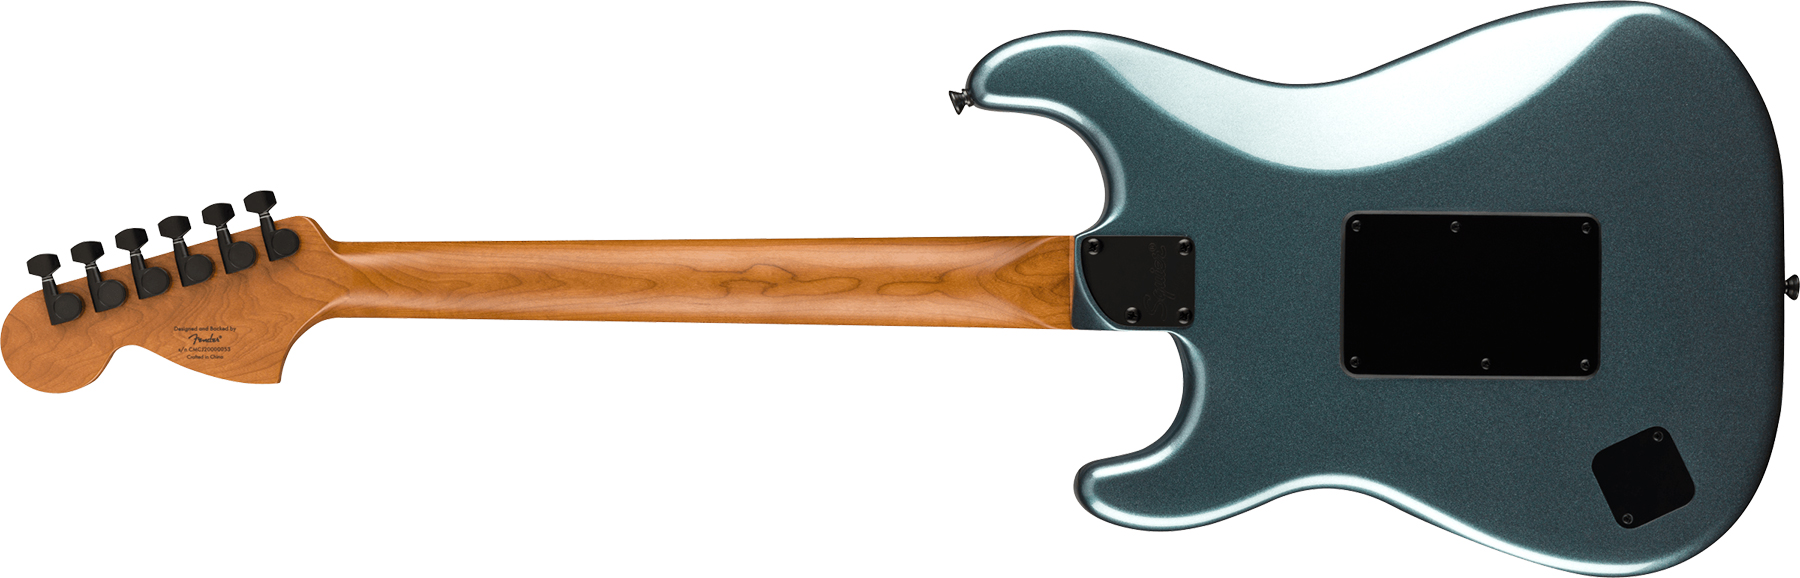 Squier Strat Contemporary Hh Fr Mn - Gunmetal Metallic - Str shape electric guitar - Variation 1